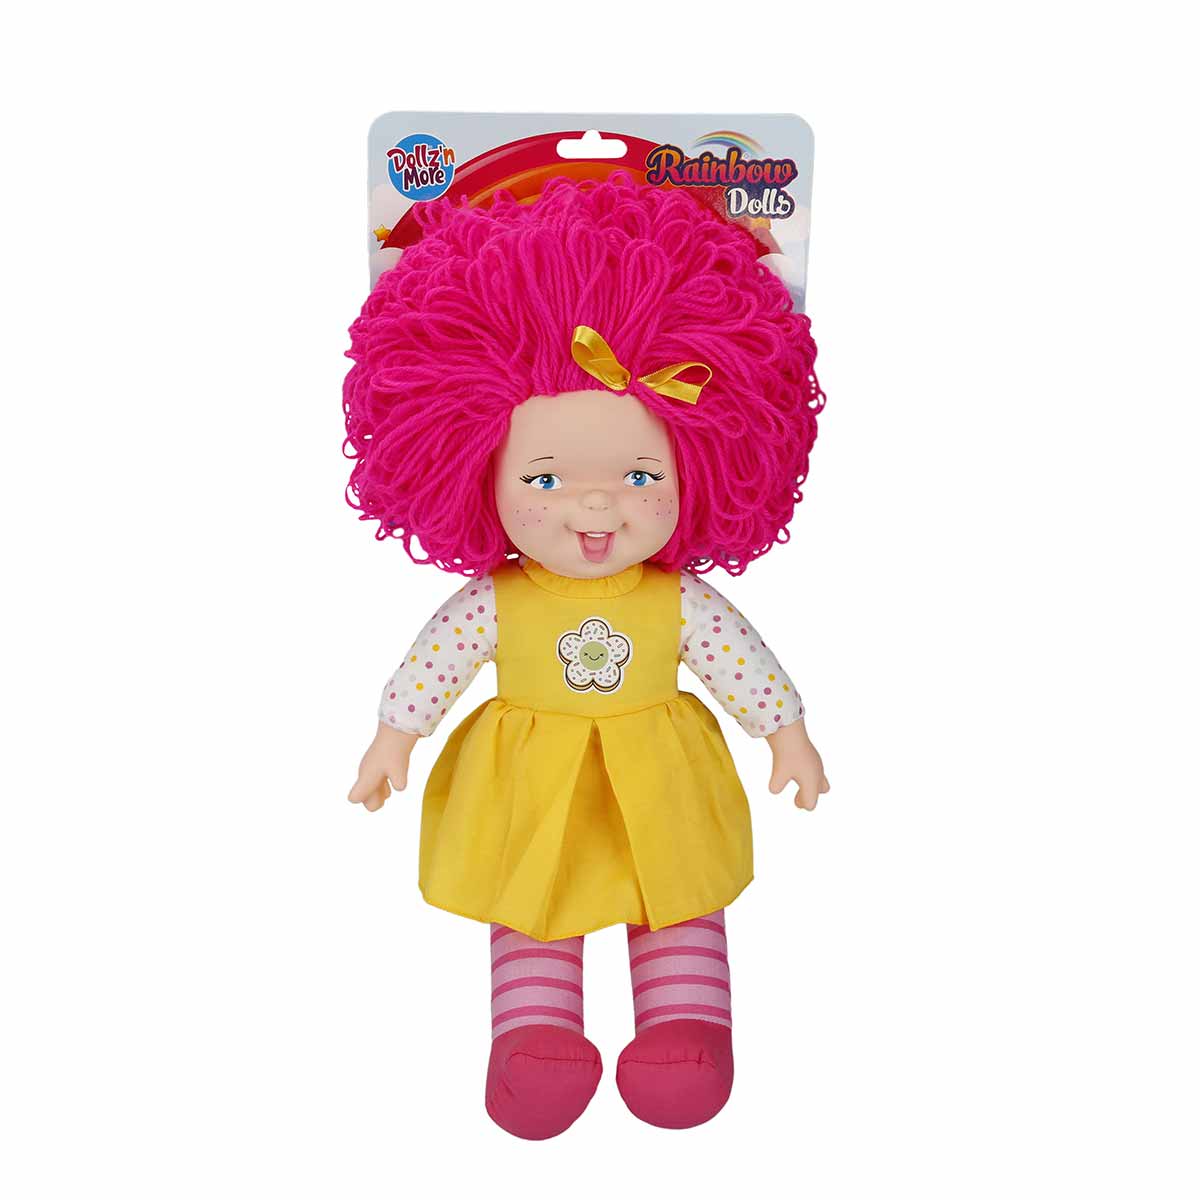 Papusa Rainbow Dolls, Dollzn More, cu par roz, 45 cm Dollz n More